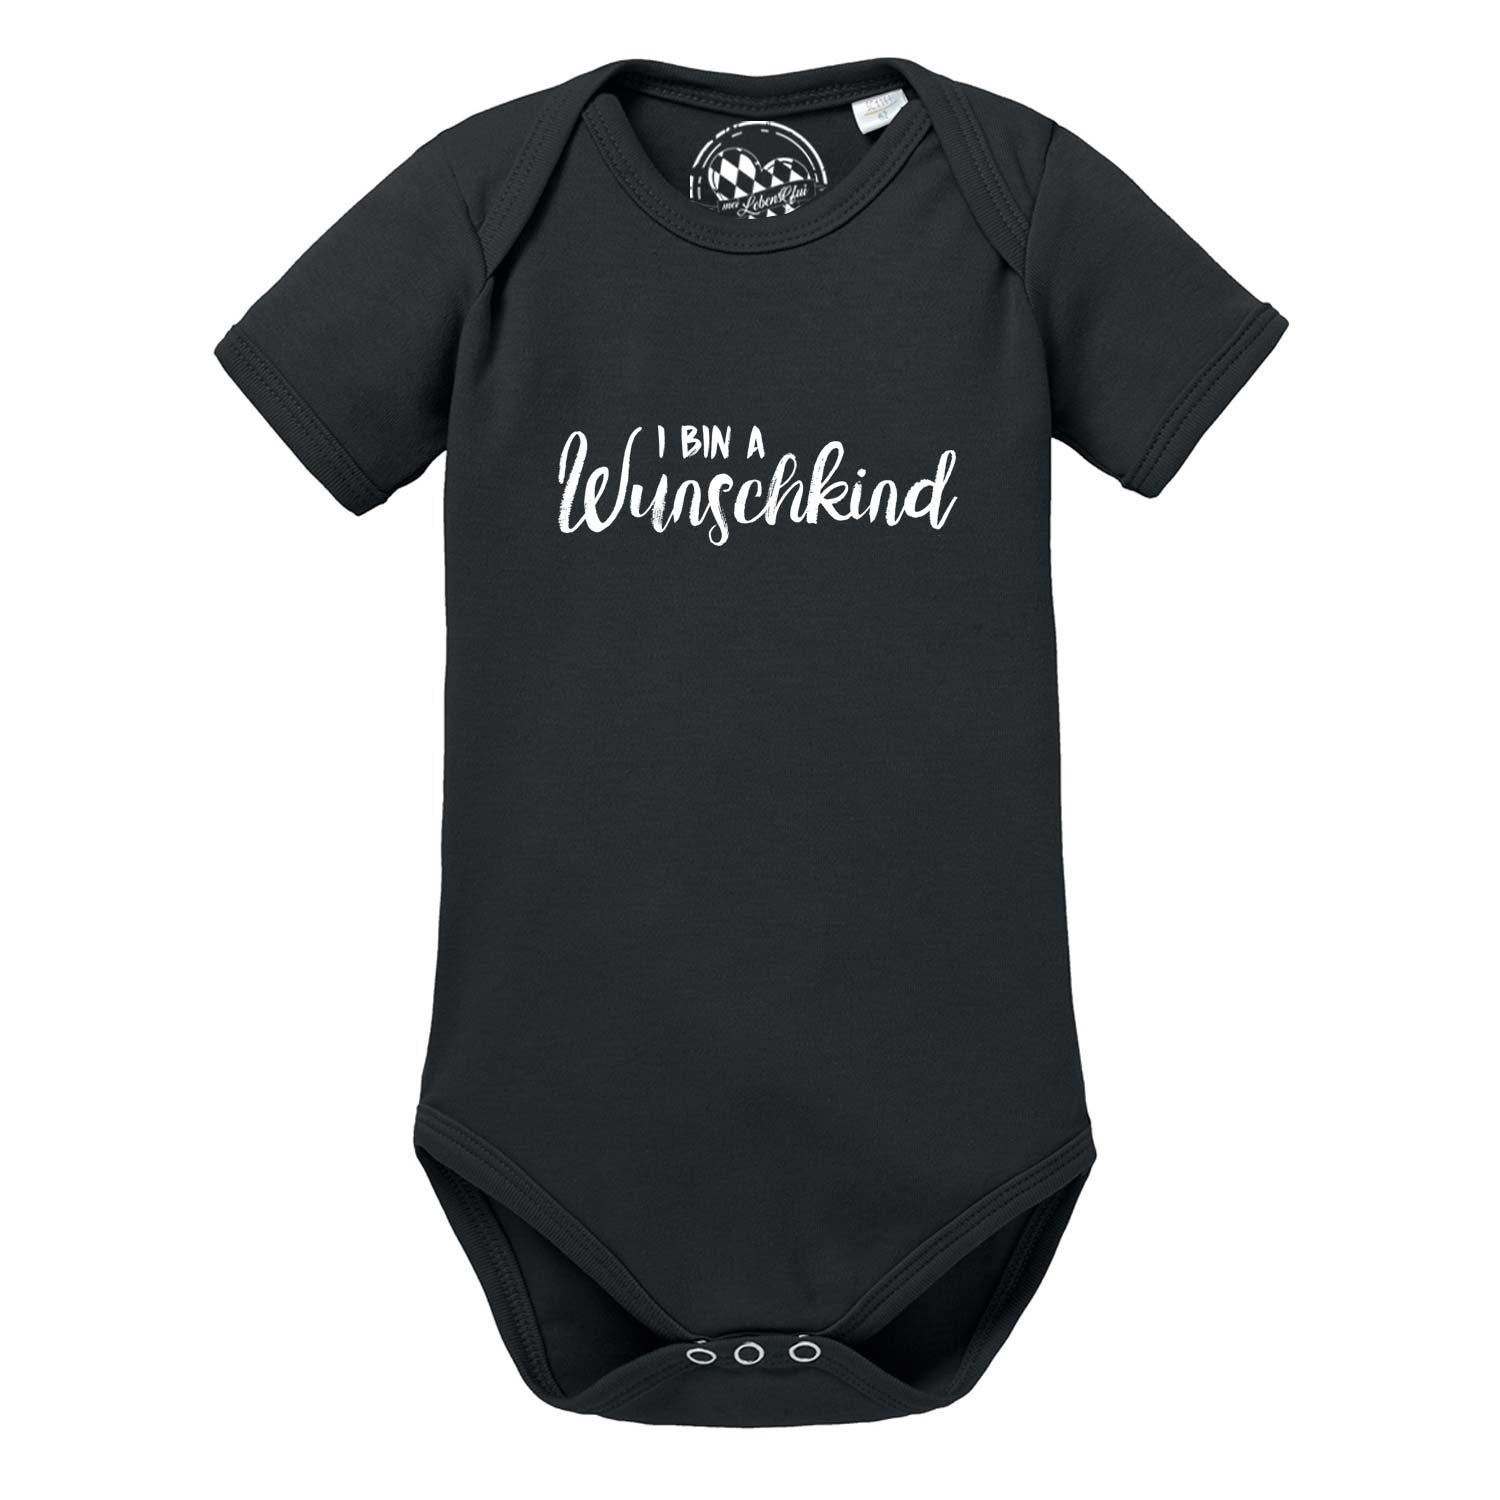 Baby Body "Wunschkind" - bavariashop - mei LebensGfui